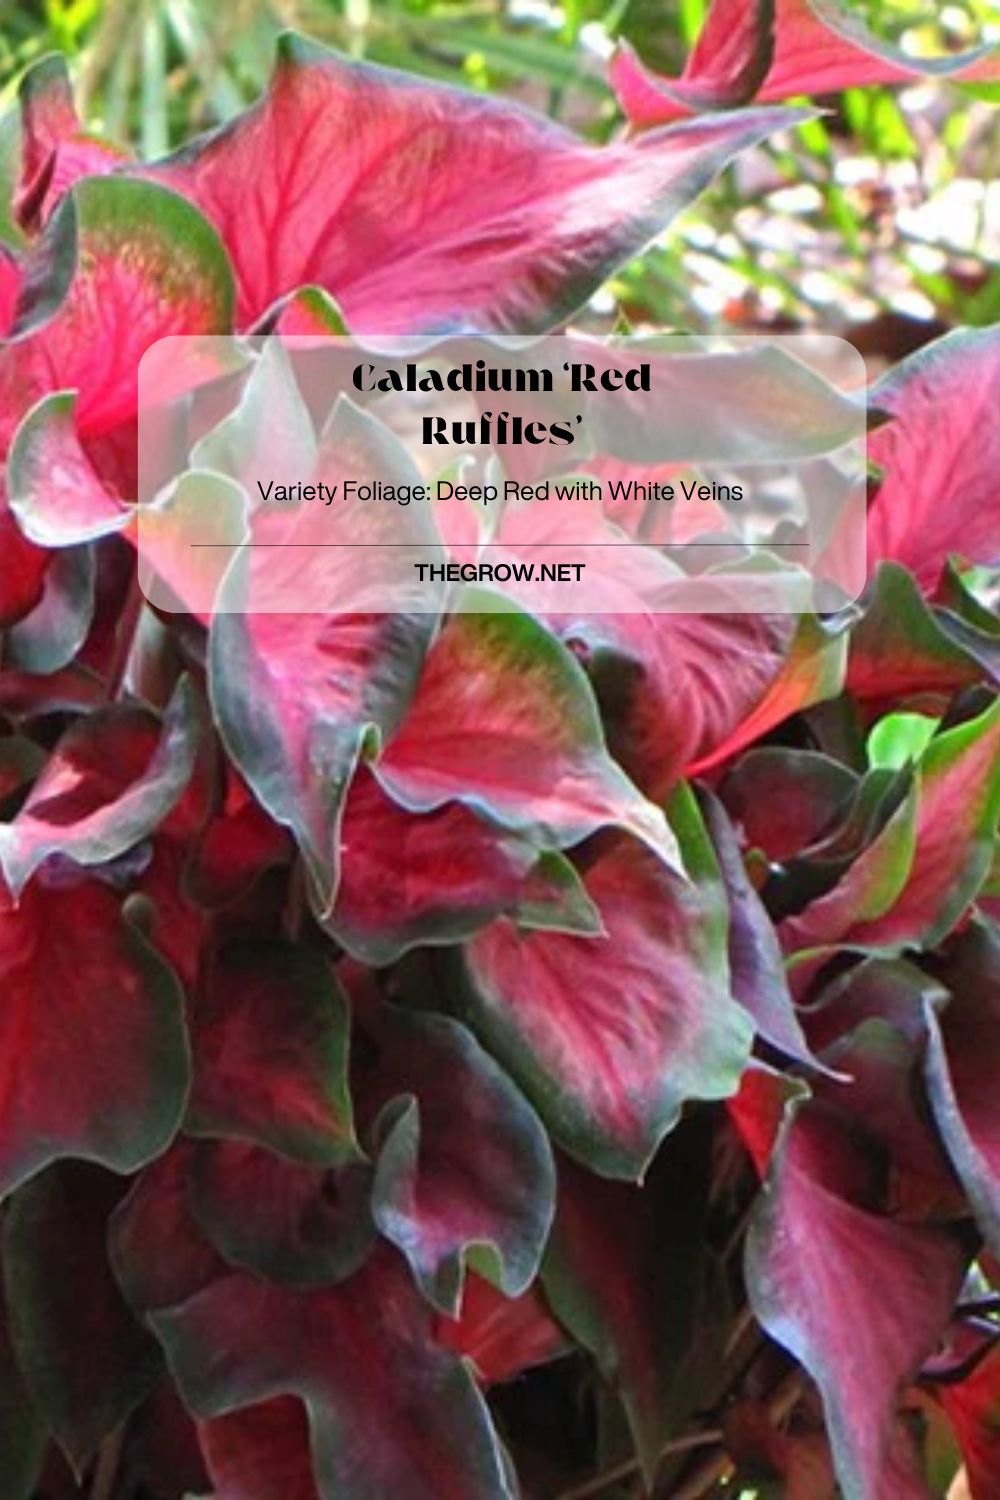 Caladium ‘Red Ruffles’